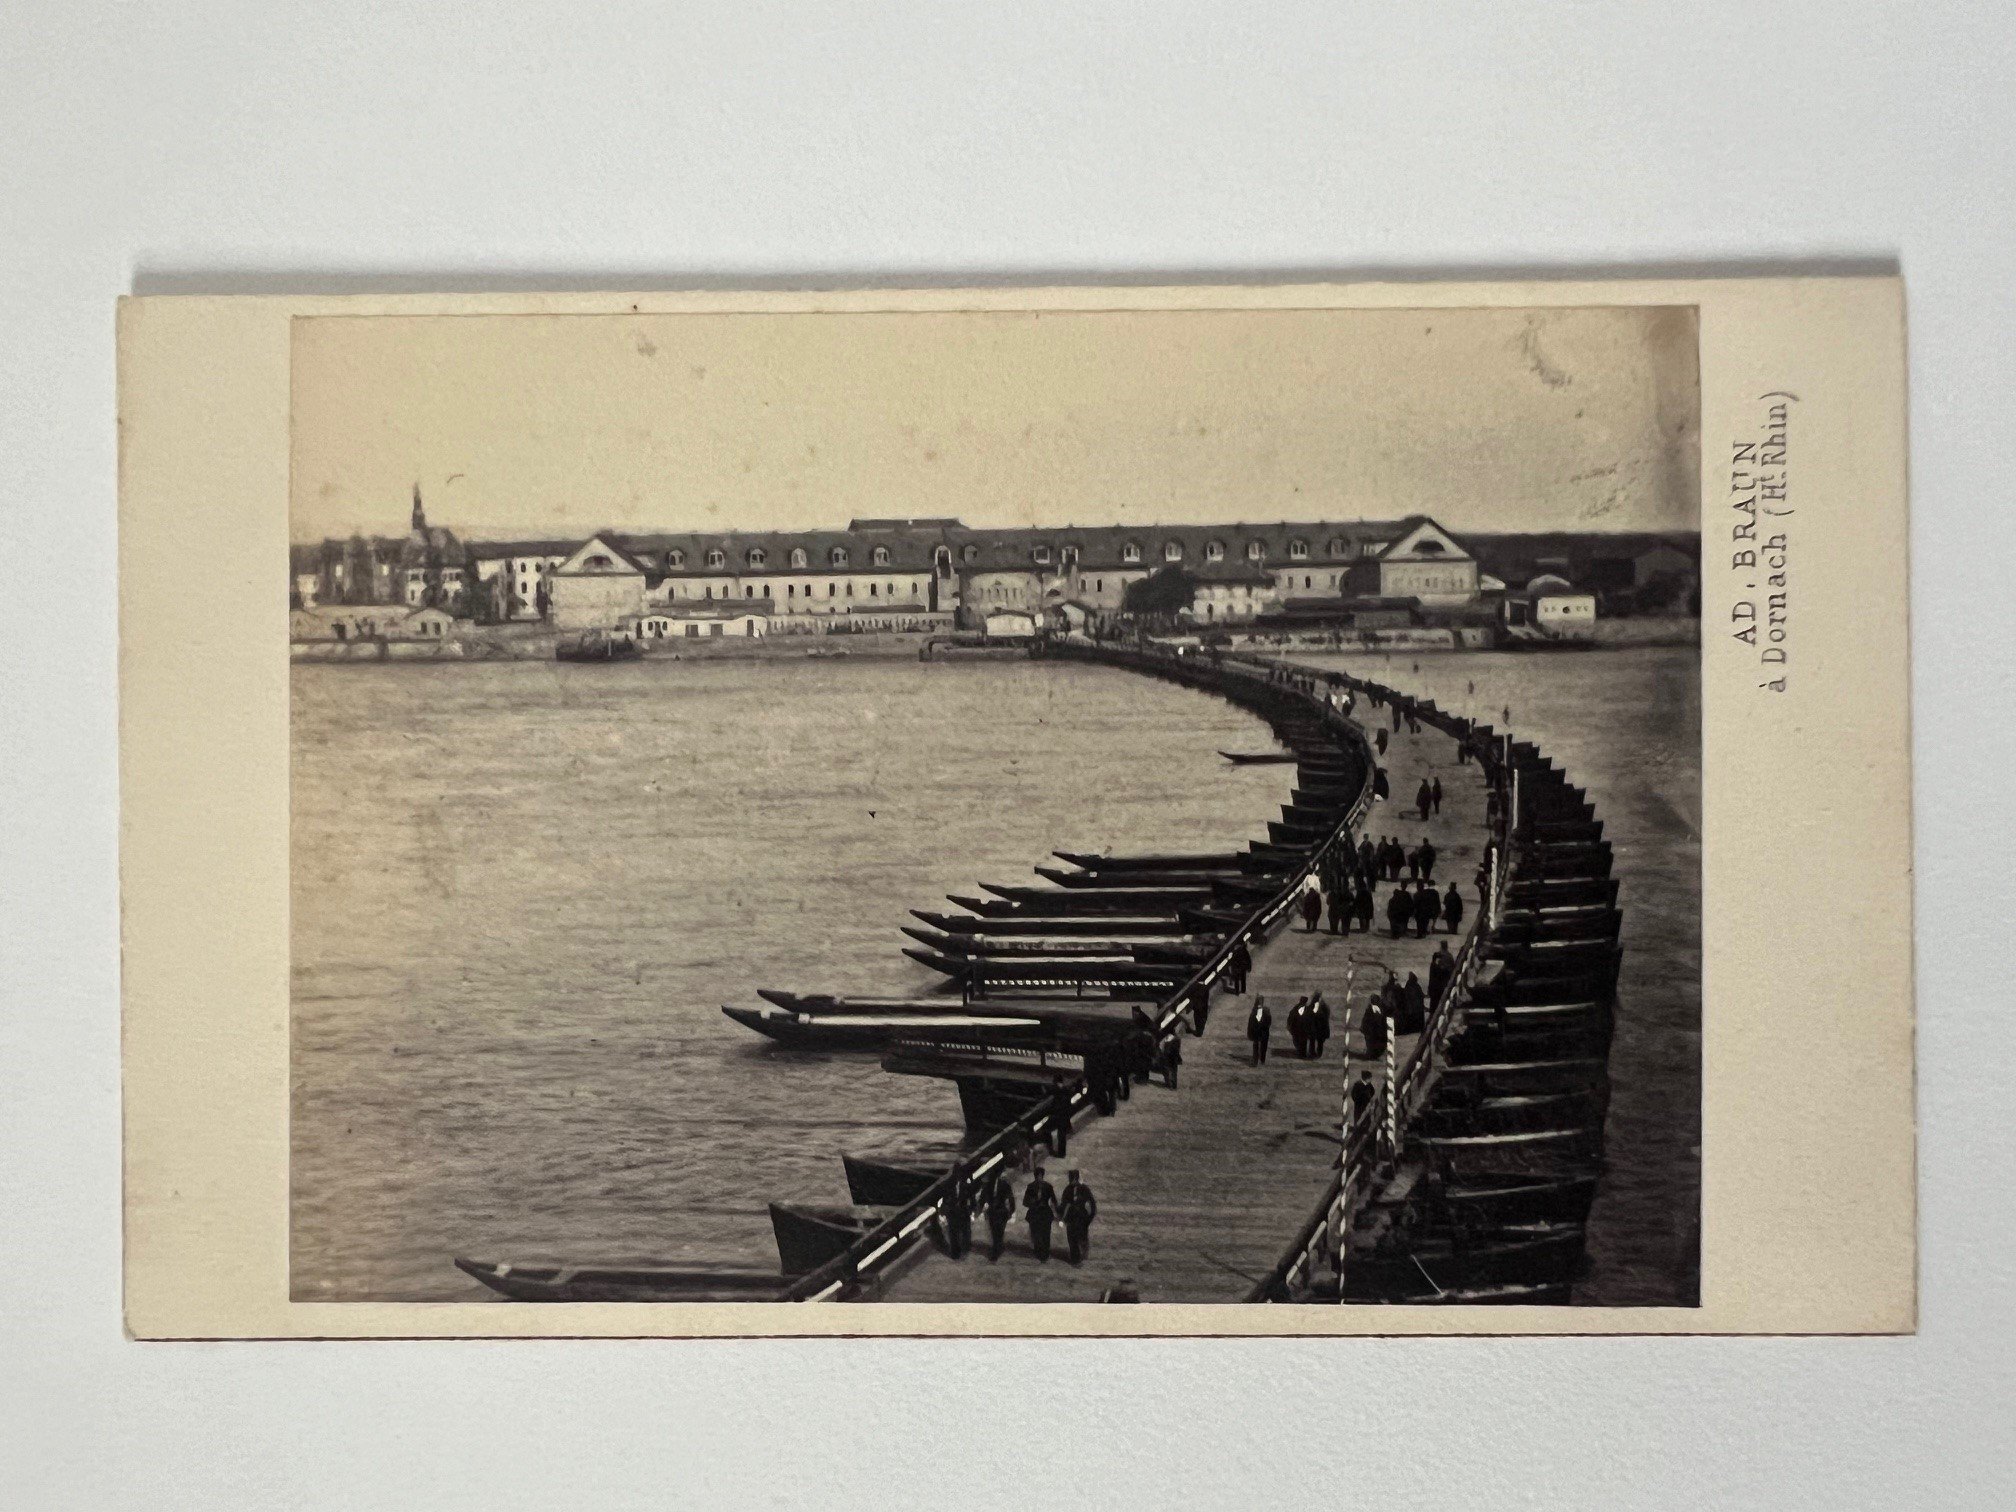 CdV, Adolpf Braun, Mainz, Pont de bateaux, ca. 1866. (Taunus-Rhein-Main - Regionalgeschichtliche Sammlung Dr. Stefan Naas CC BY-NC-SA)